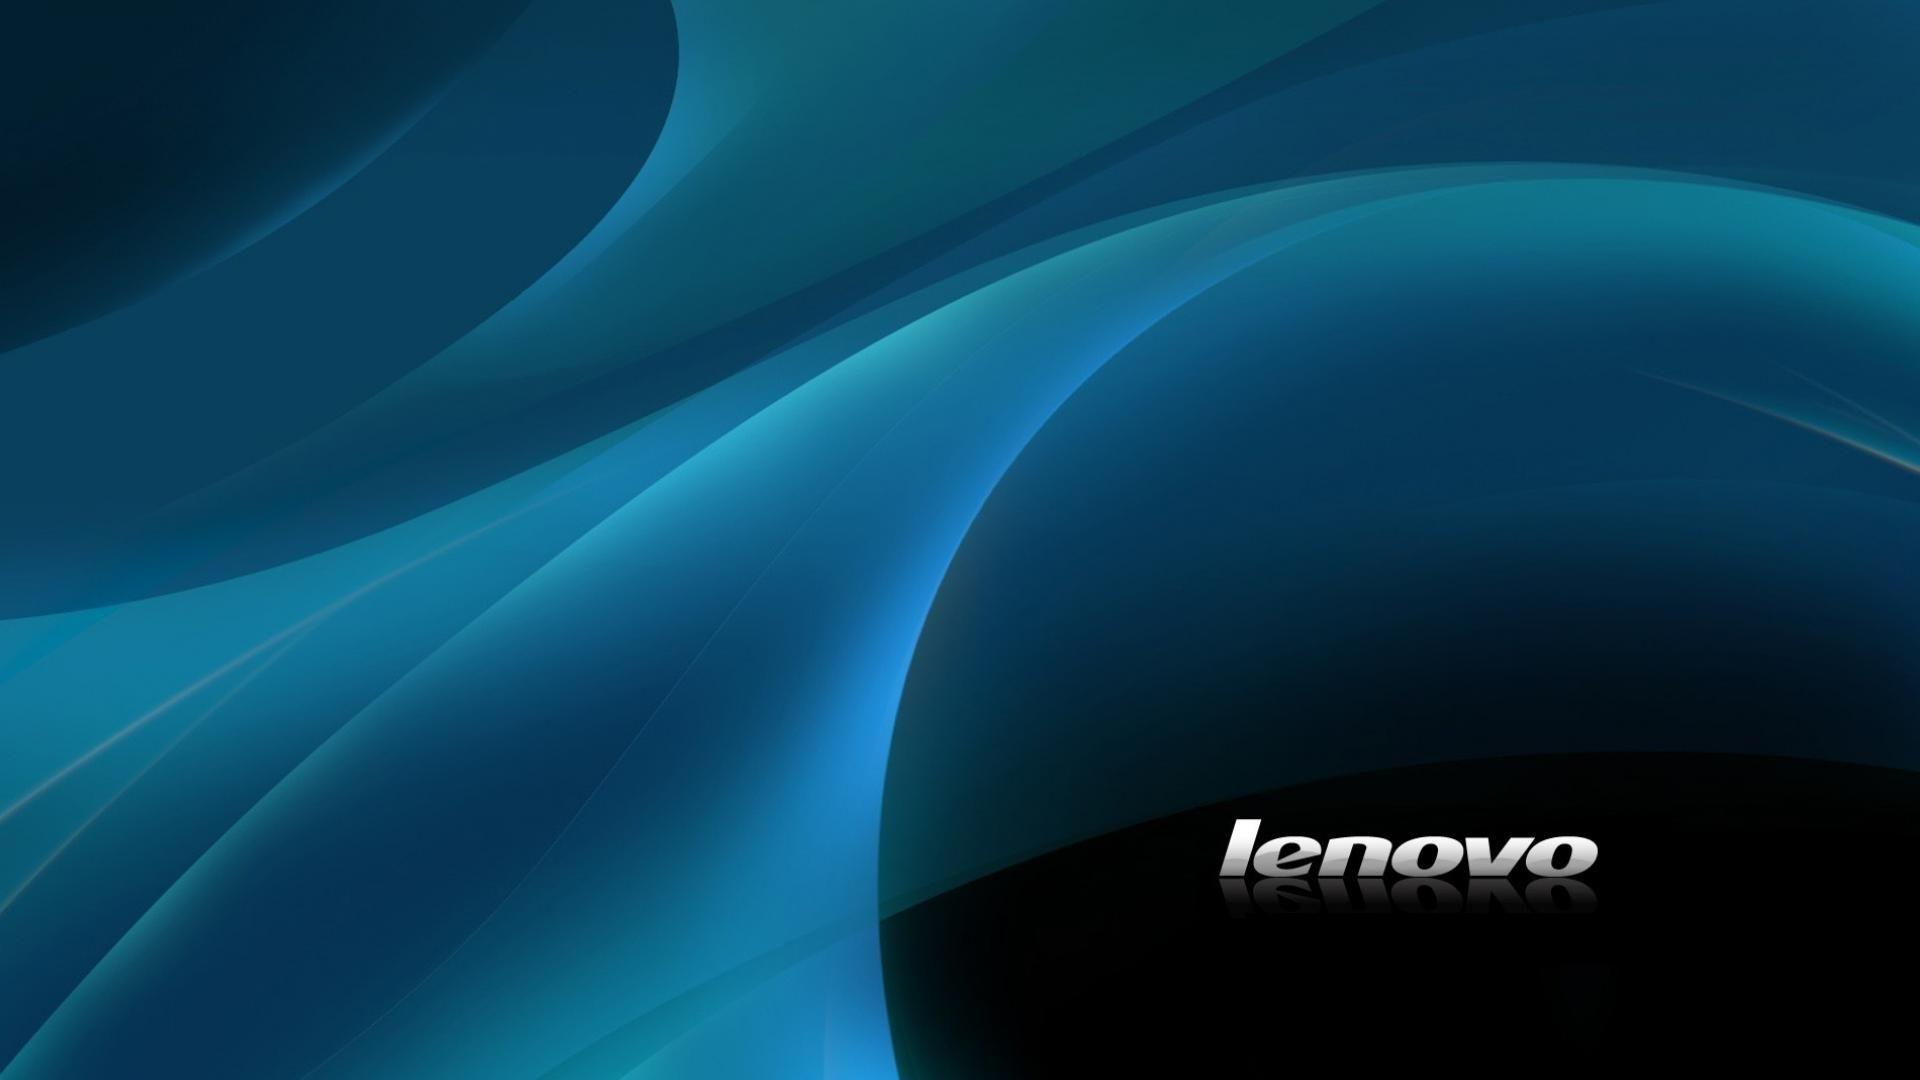 Awesome Lenovo Thinkpad Wallpaper 1600×900 Free. Wallpaper HD 2018